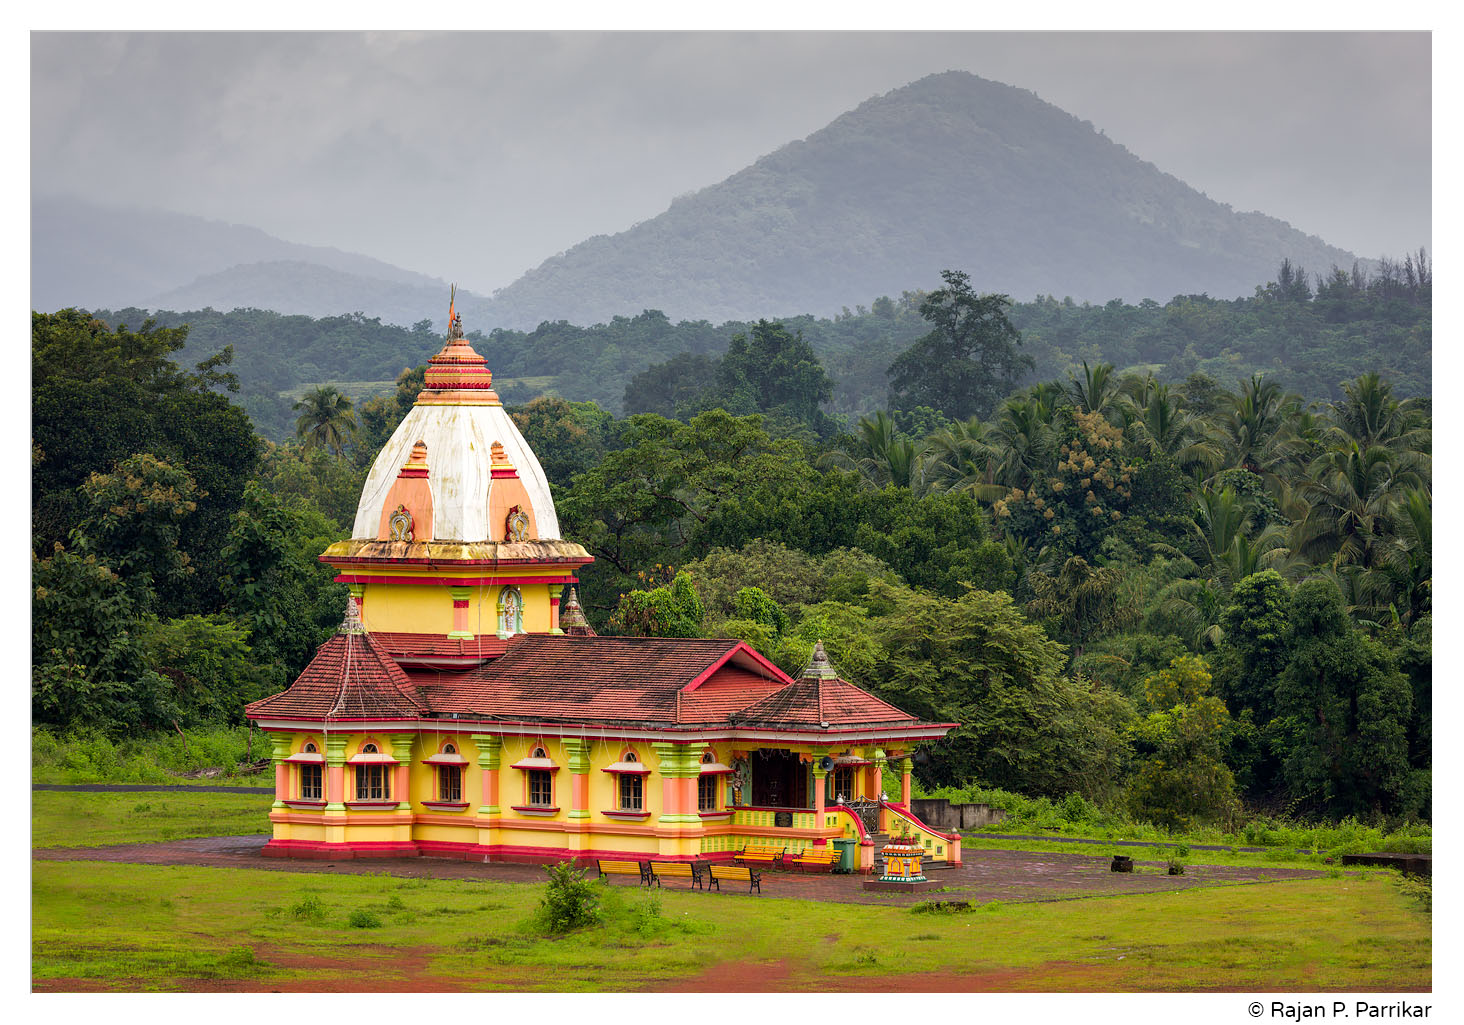 Sateri Temple in Shigao, Goa